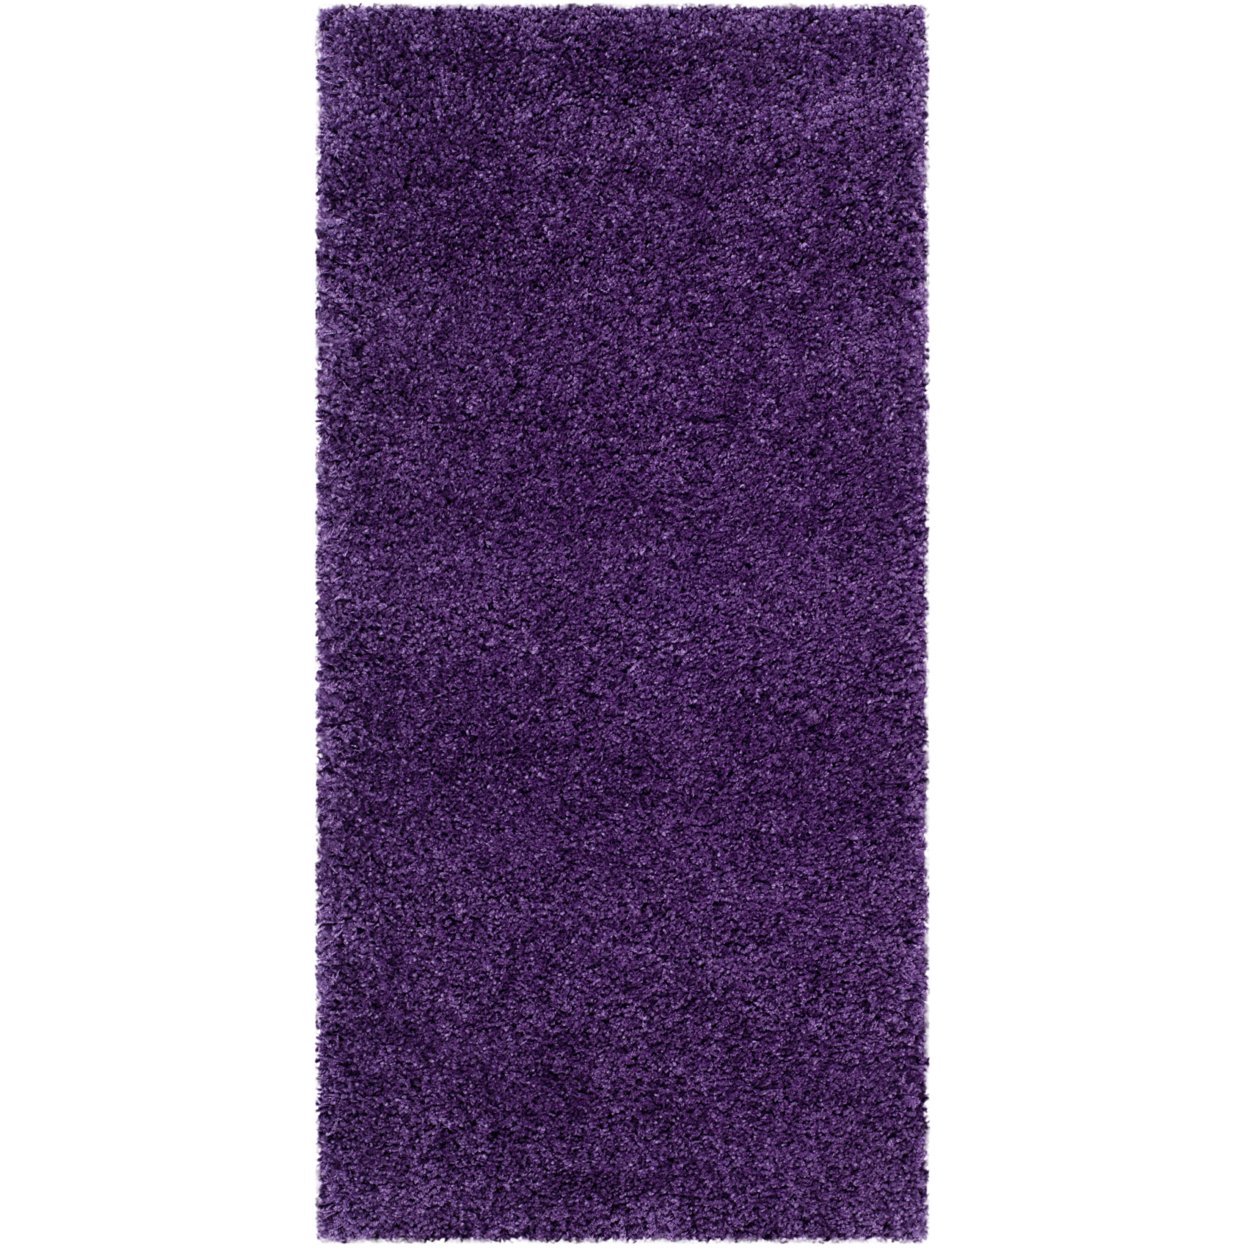 SAFAVIEH Milan Shag Collection SG180-7373 Purple Rug